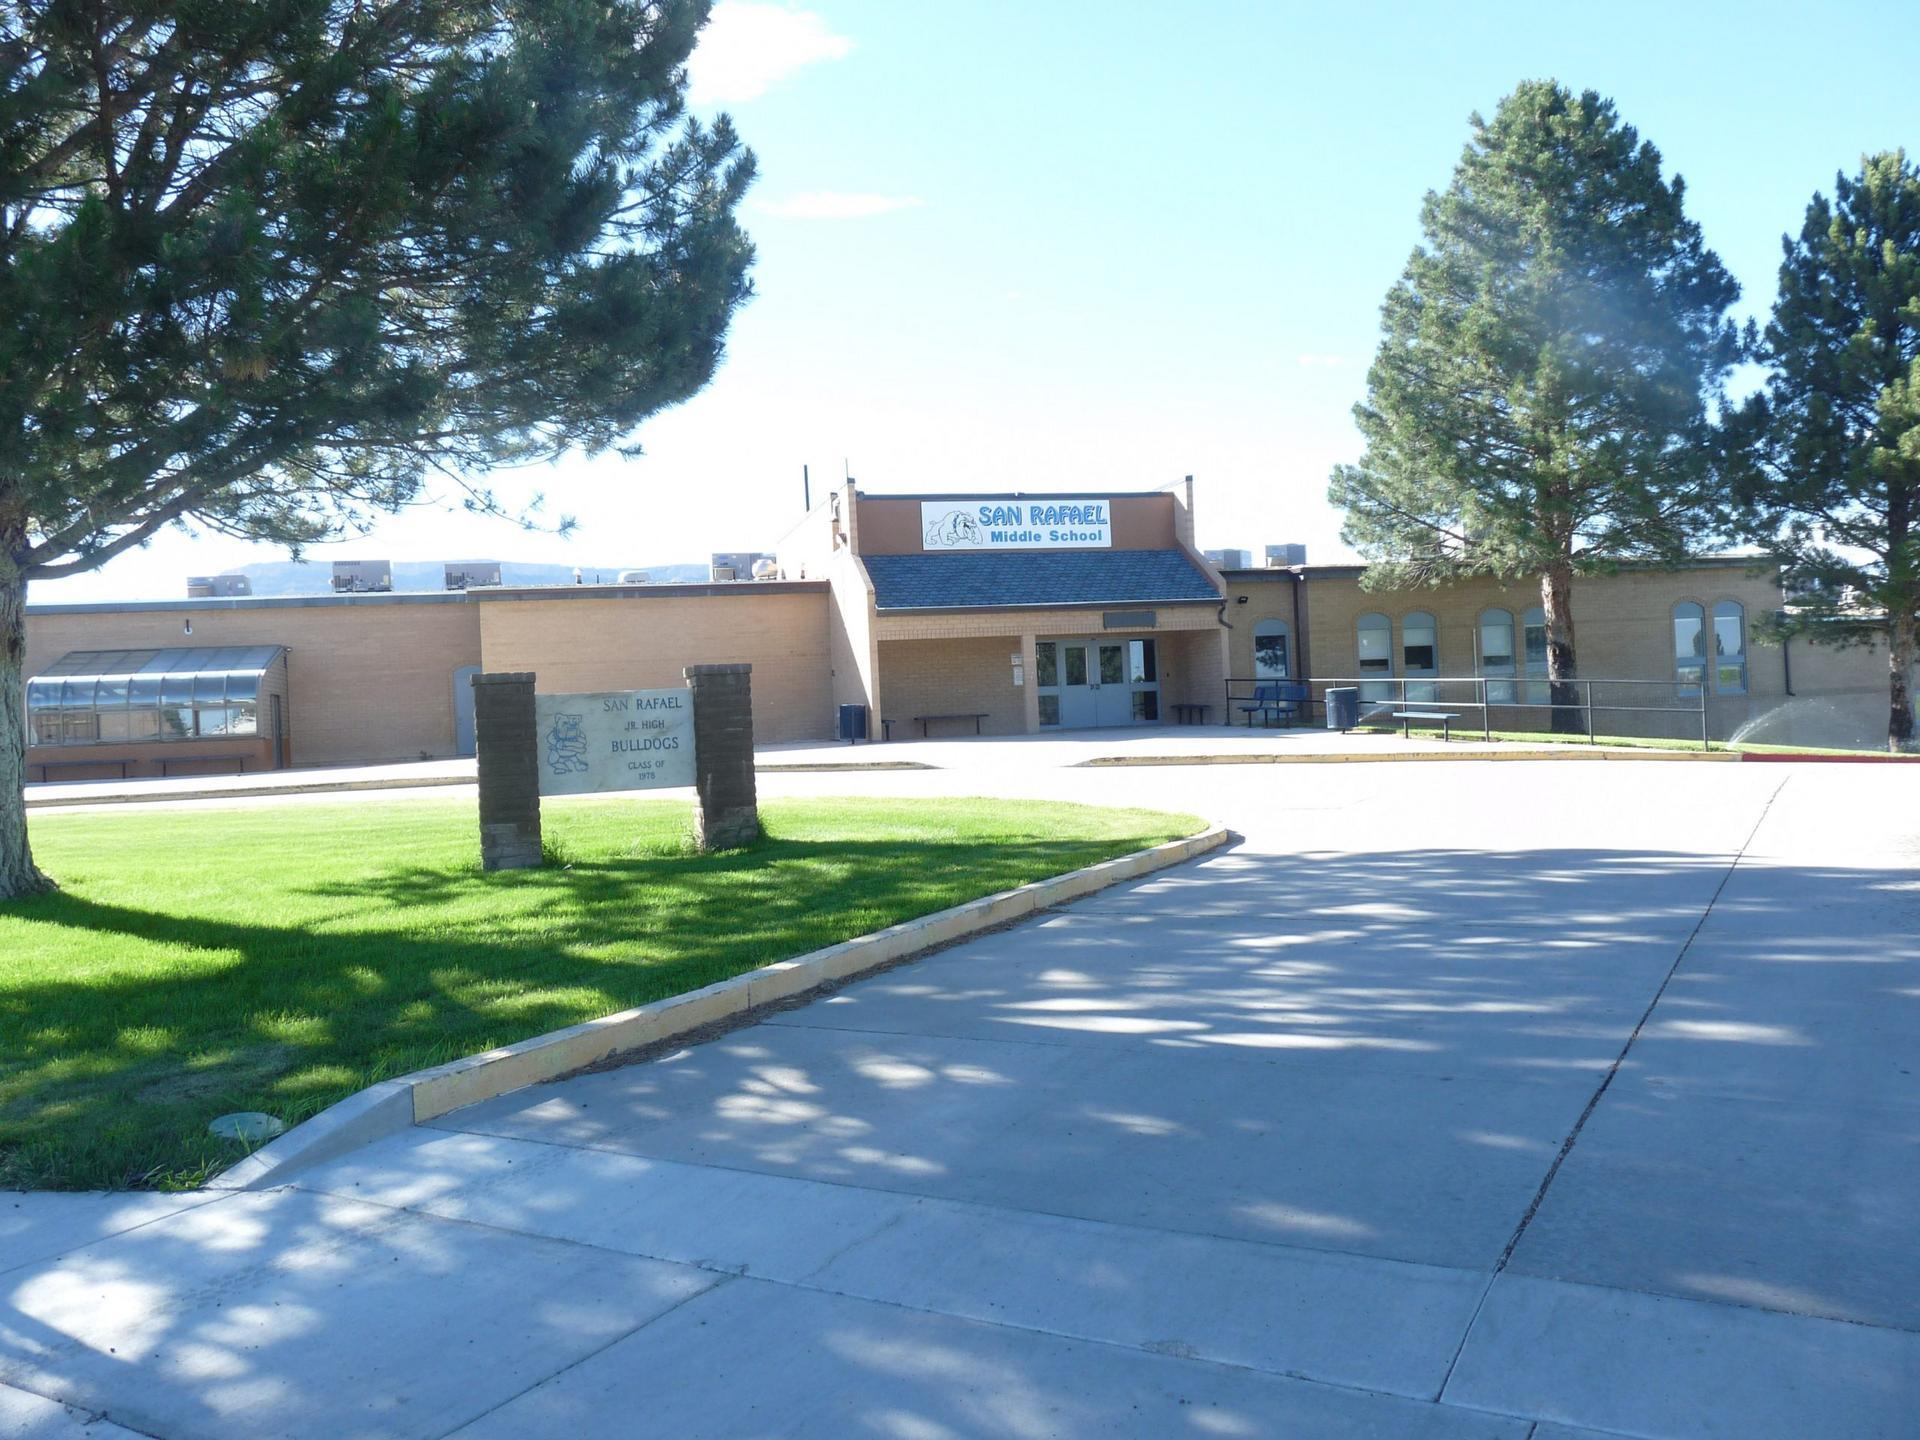 San-Rafael-Middle-School-scaled.jpg